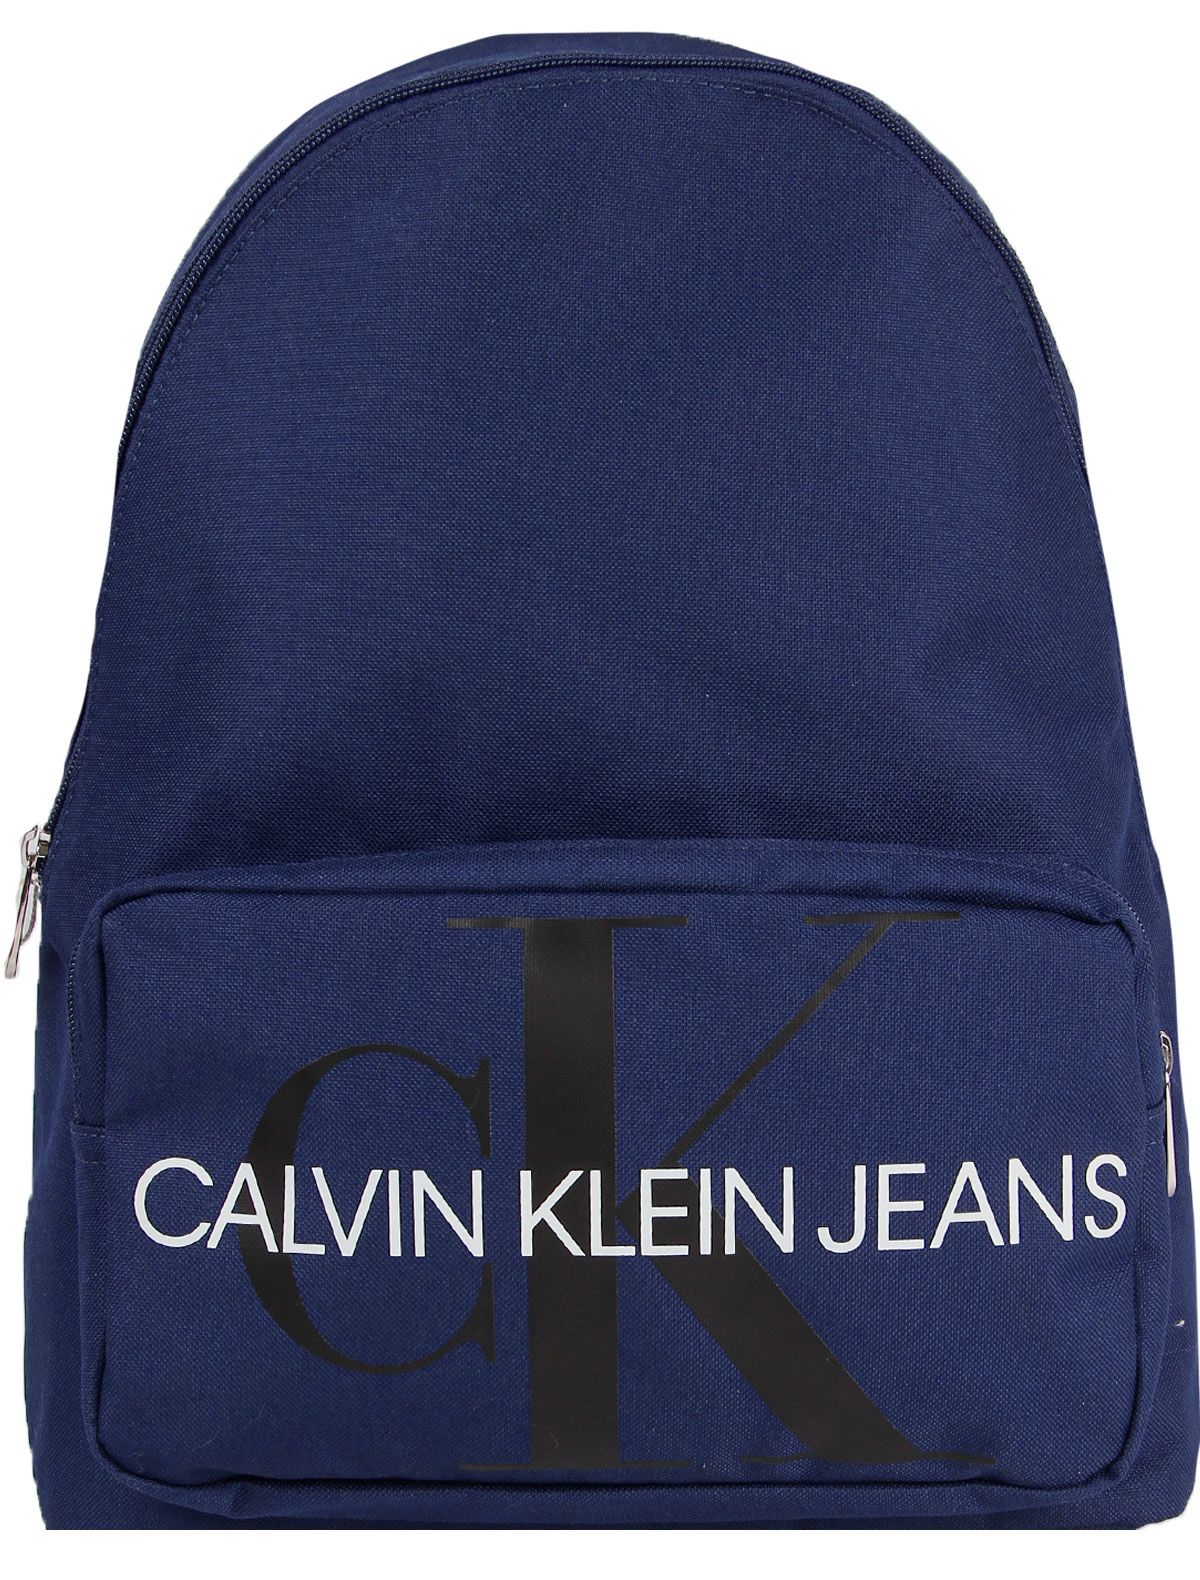 Рюкзак CALVIN KLEIN JEANS 2176909, цвет синий, размер 4 1504528070051 - фото 1